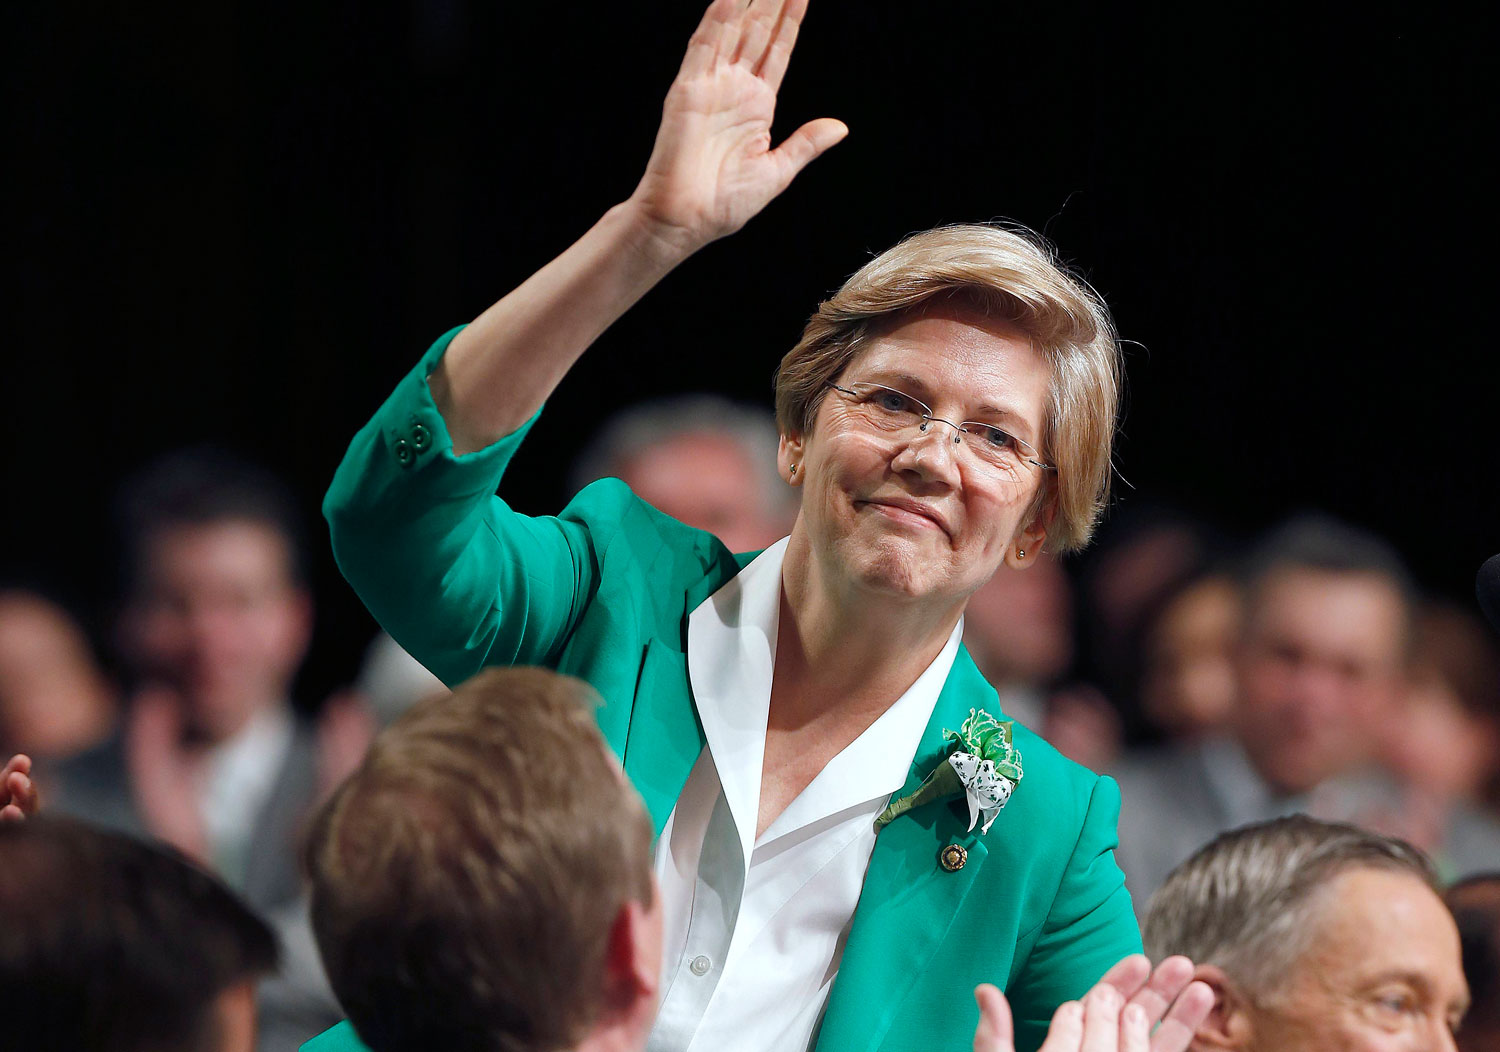 The ‘Draft Elizabeth Warren’ Campaign Gets a Big Boost from ‘The Boston Globe’